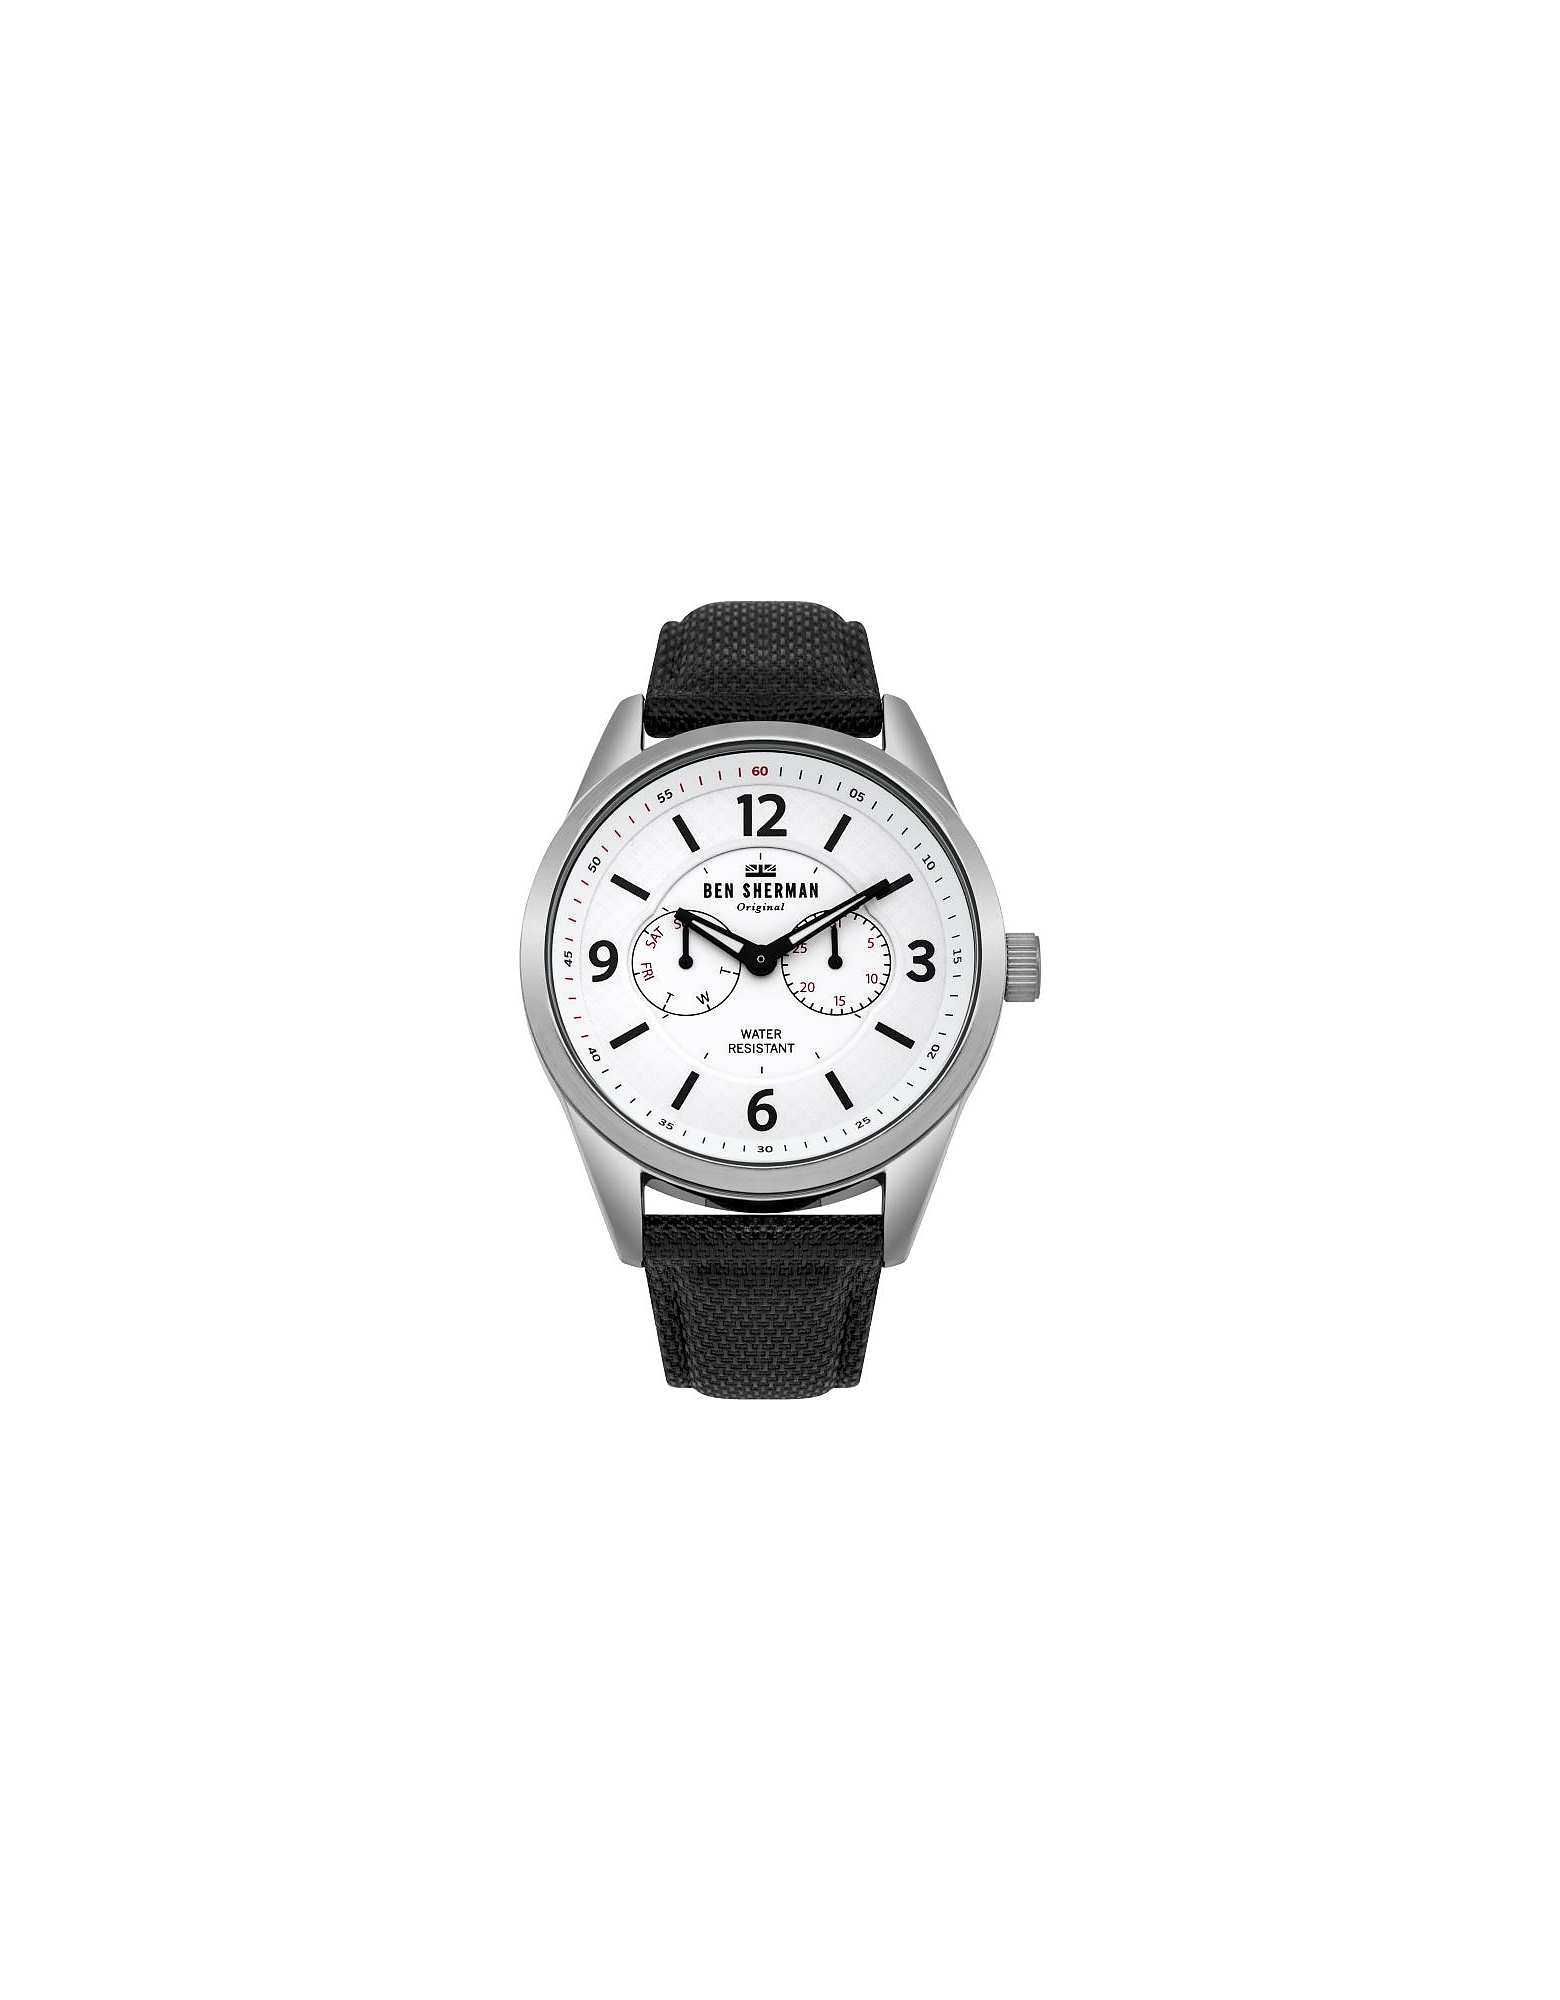 Ben Sherman Designer Men's Watches Men's Quartz Analogue Watch In Silver